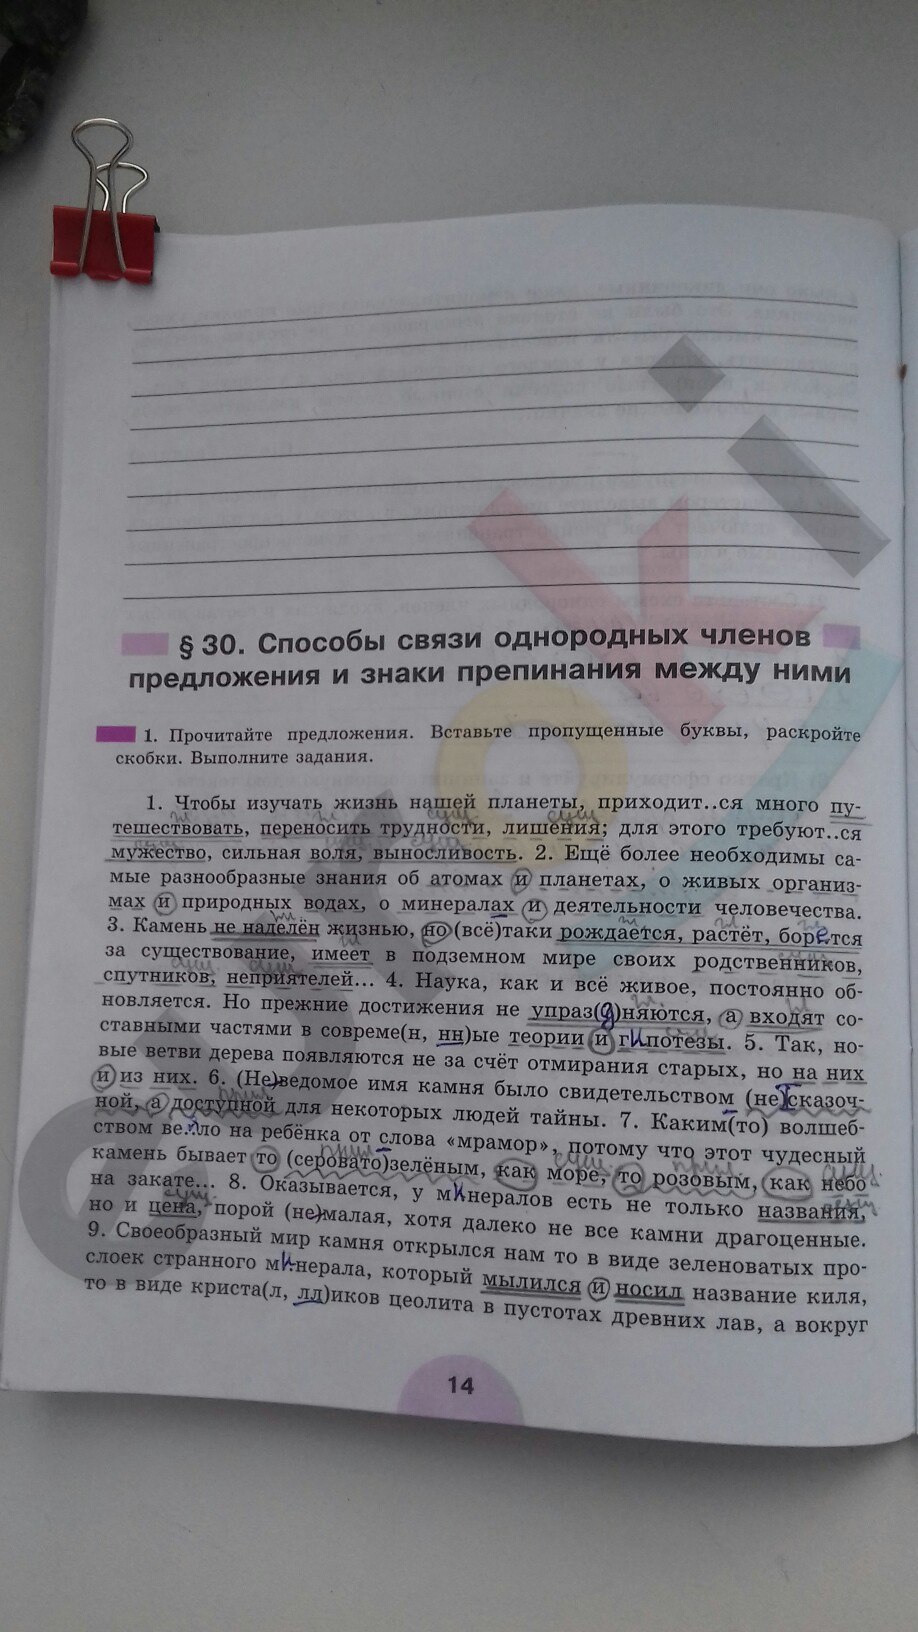 гдз 8 класс рабочая тетрадь часть 2 страница 14 русский язык Рыбченкова, Александрова